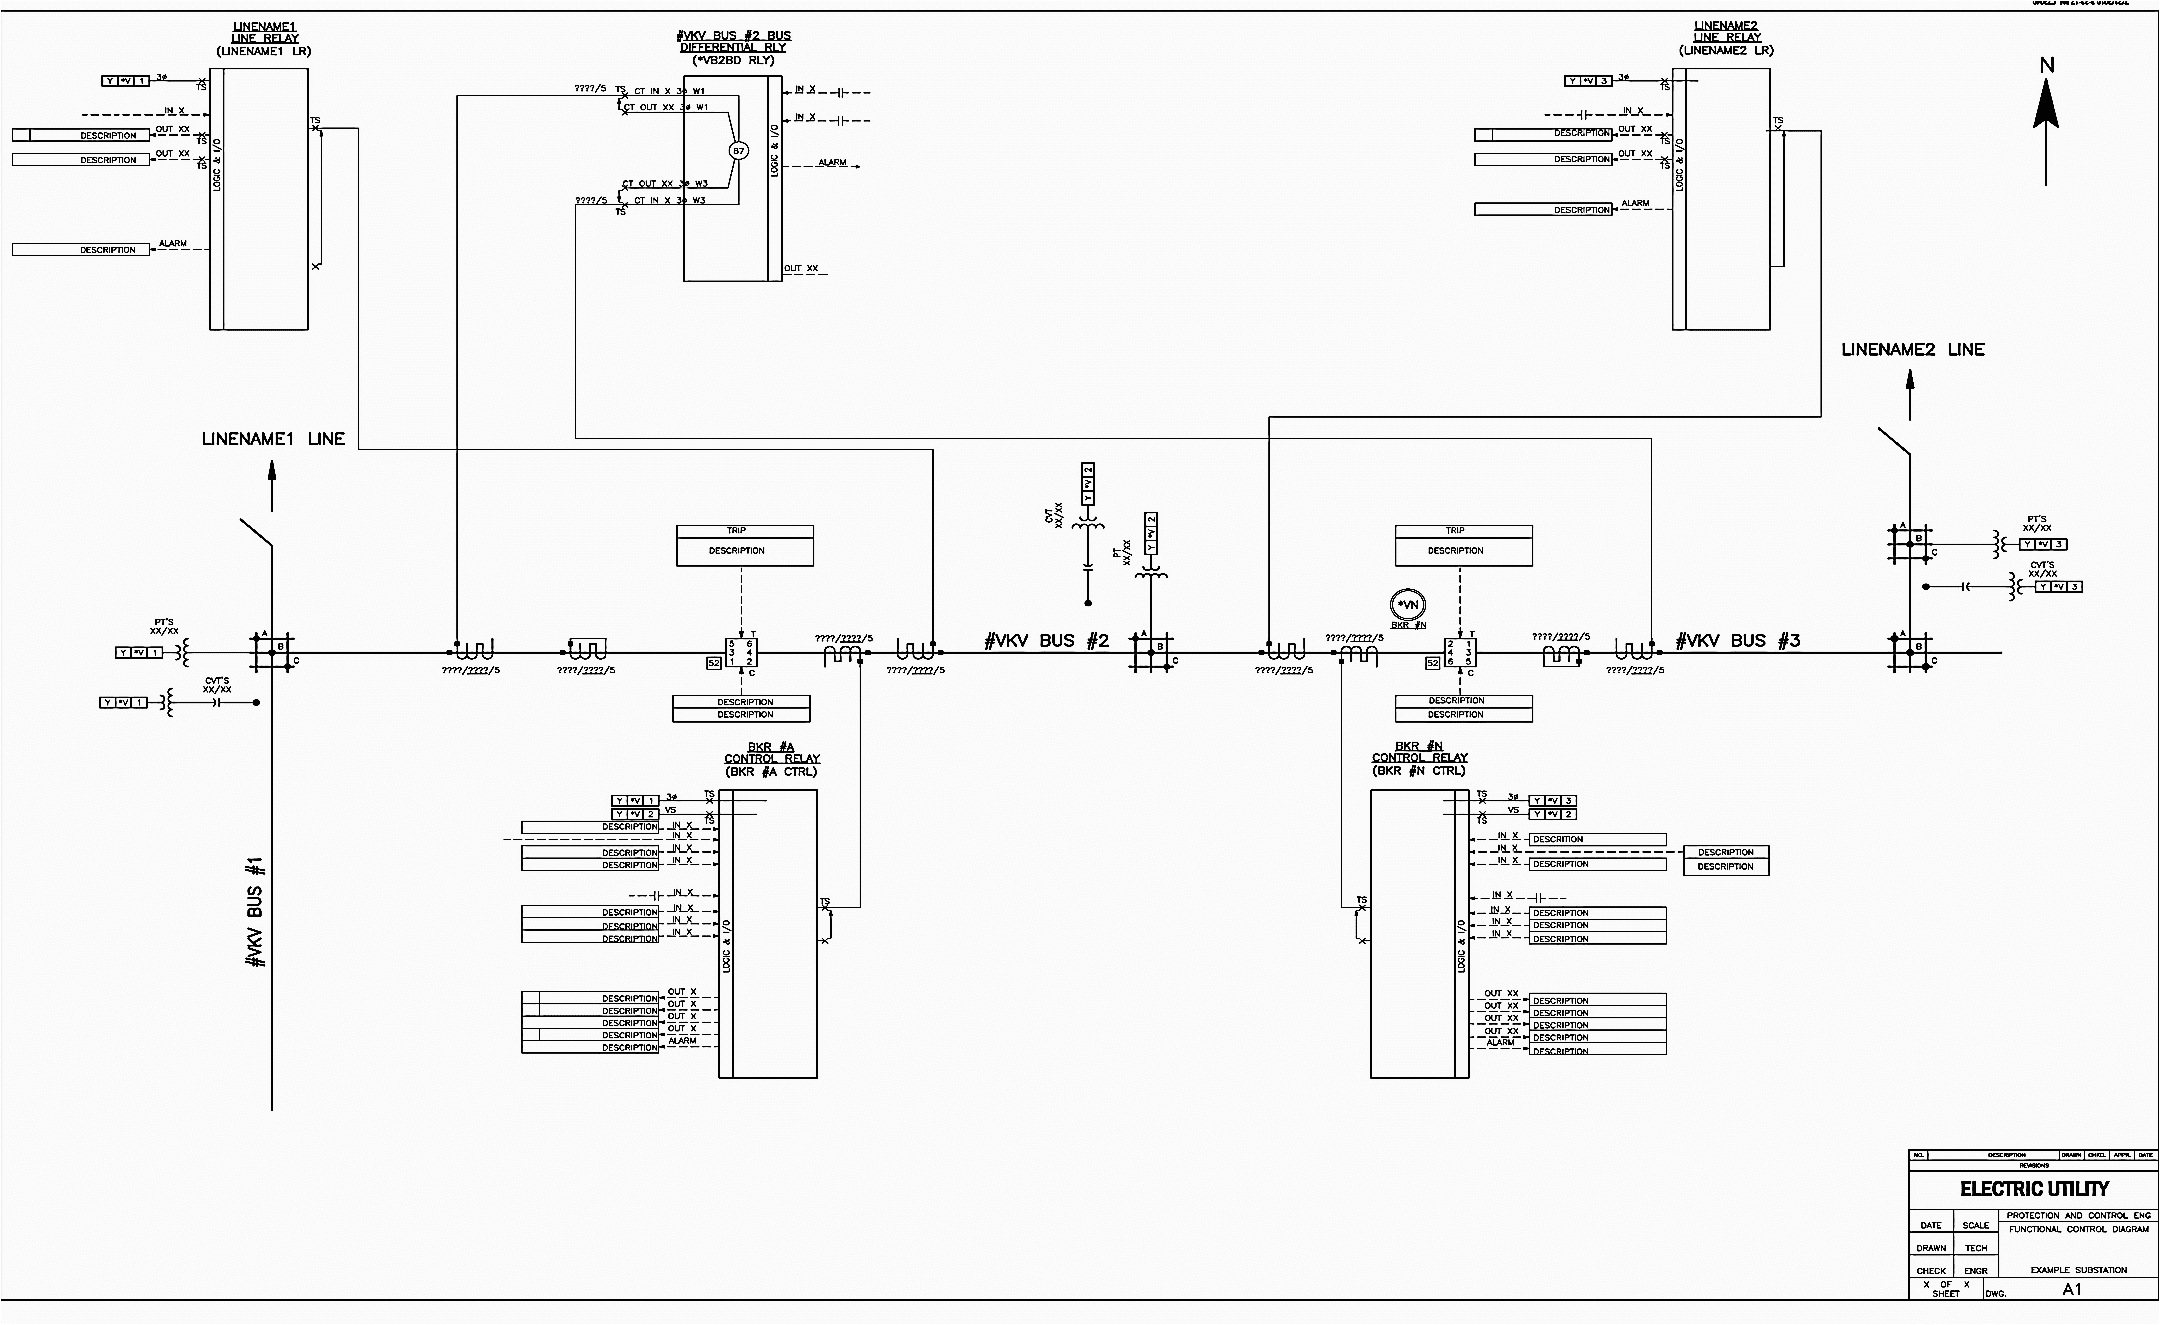 wiring diagram line wiring diagram sample wiring diagram lincoln 1992 eaod